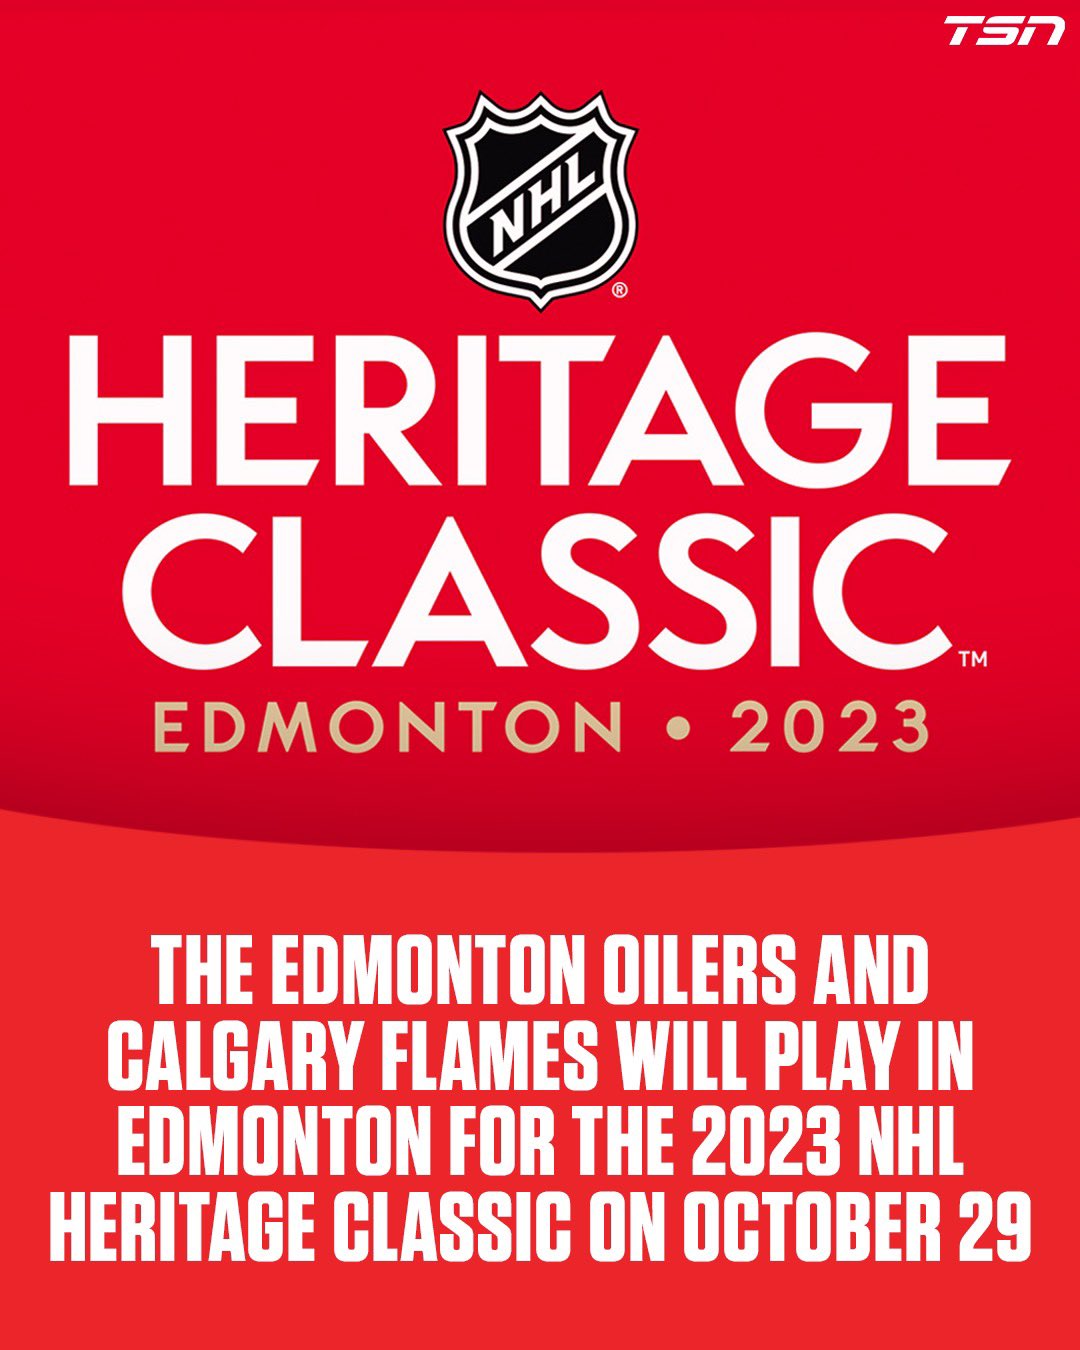 Heritage Classic coming back to Edmonton: TSN